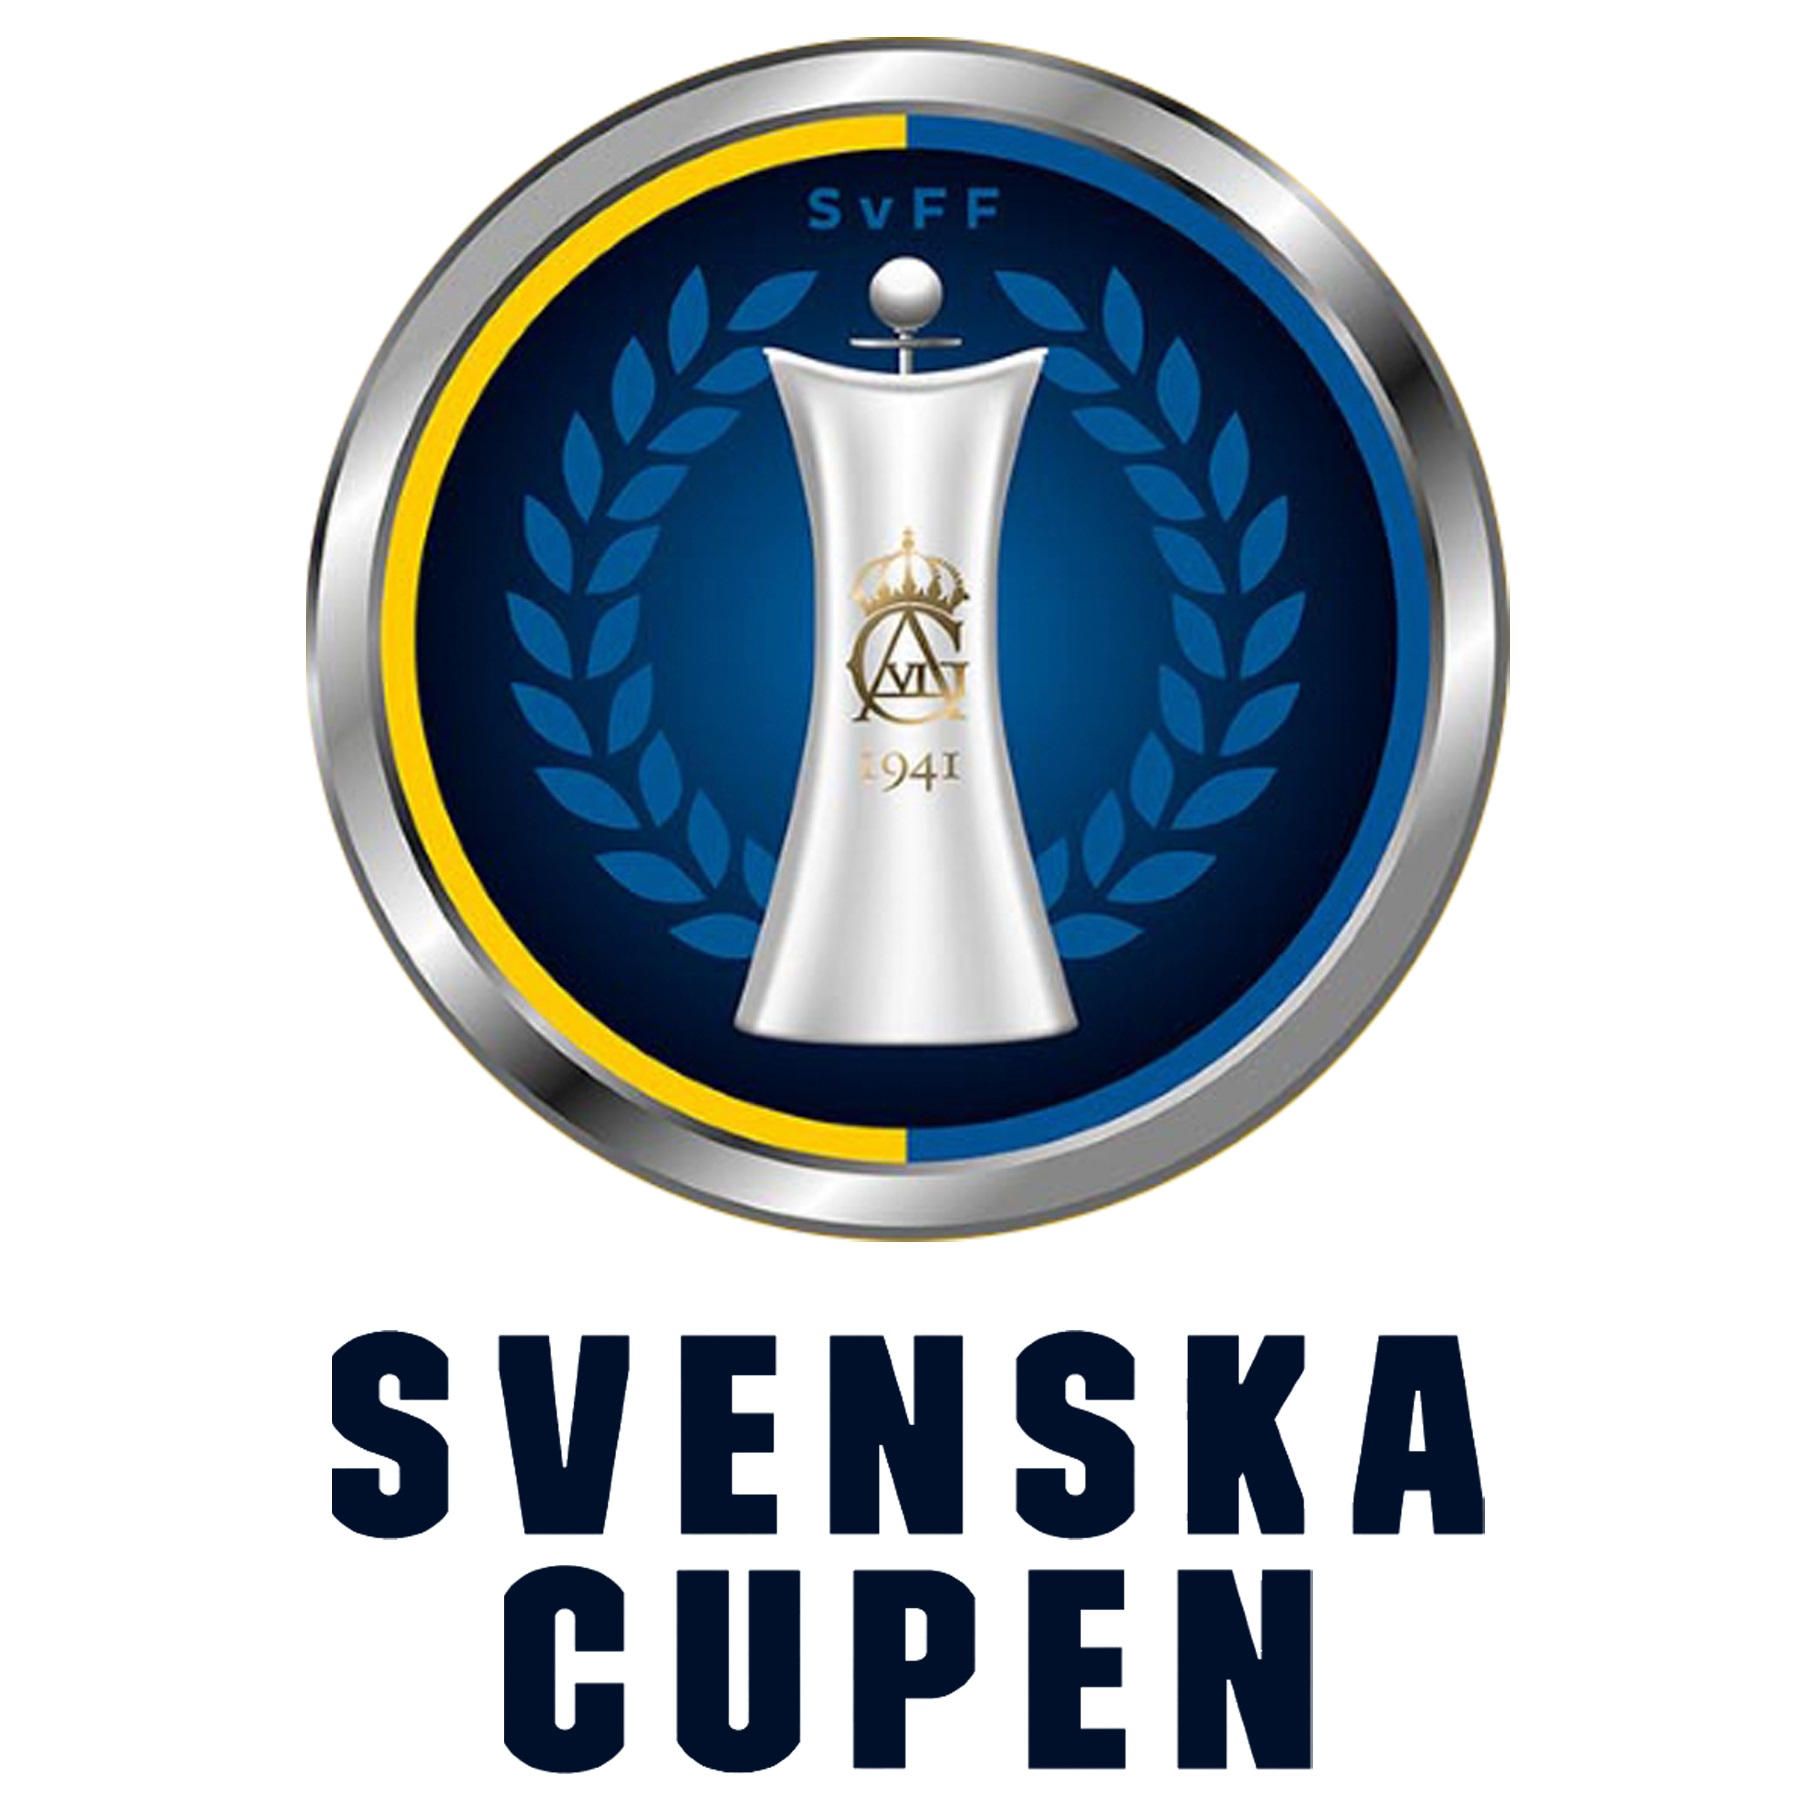 Swedish cup winner